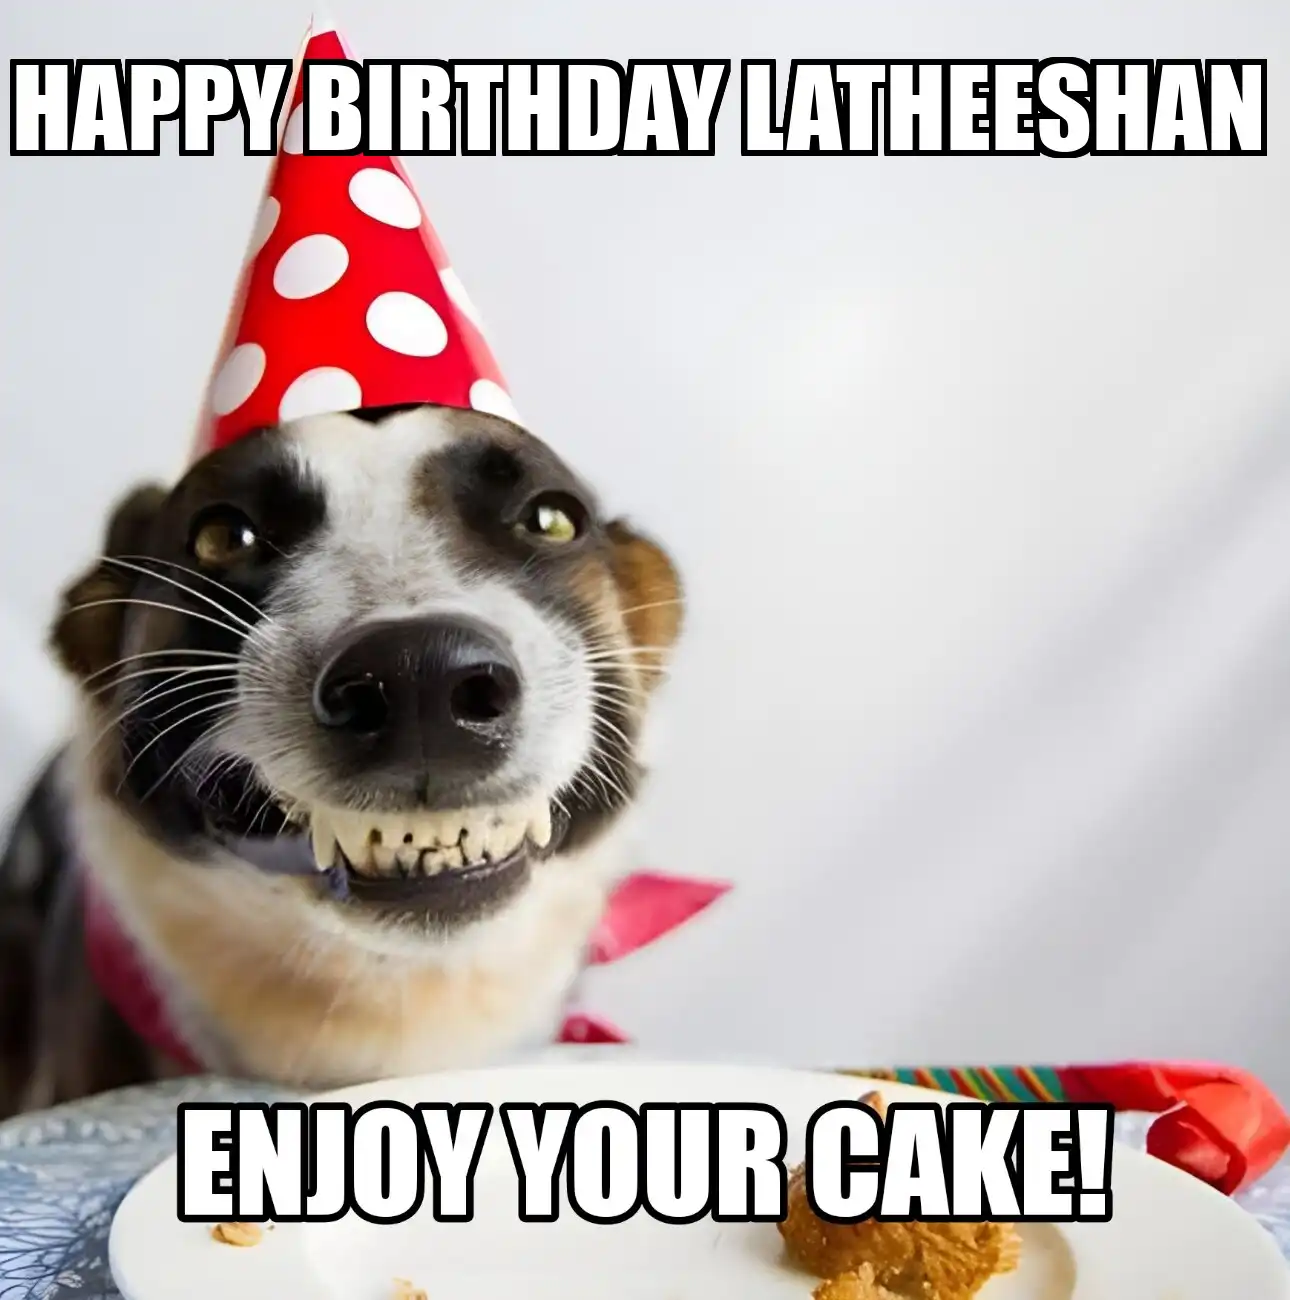 Happy Birthday Latheeshan Enjoy Your Cake Dog Meme